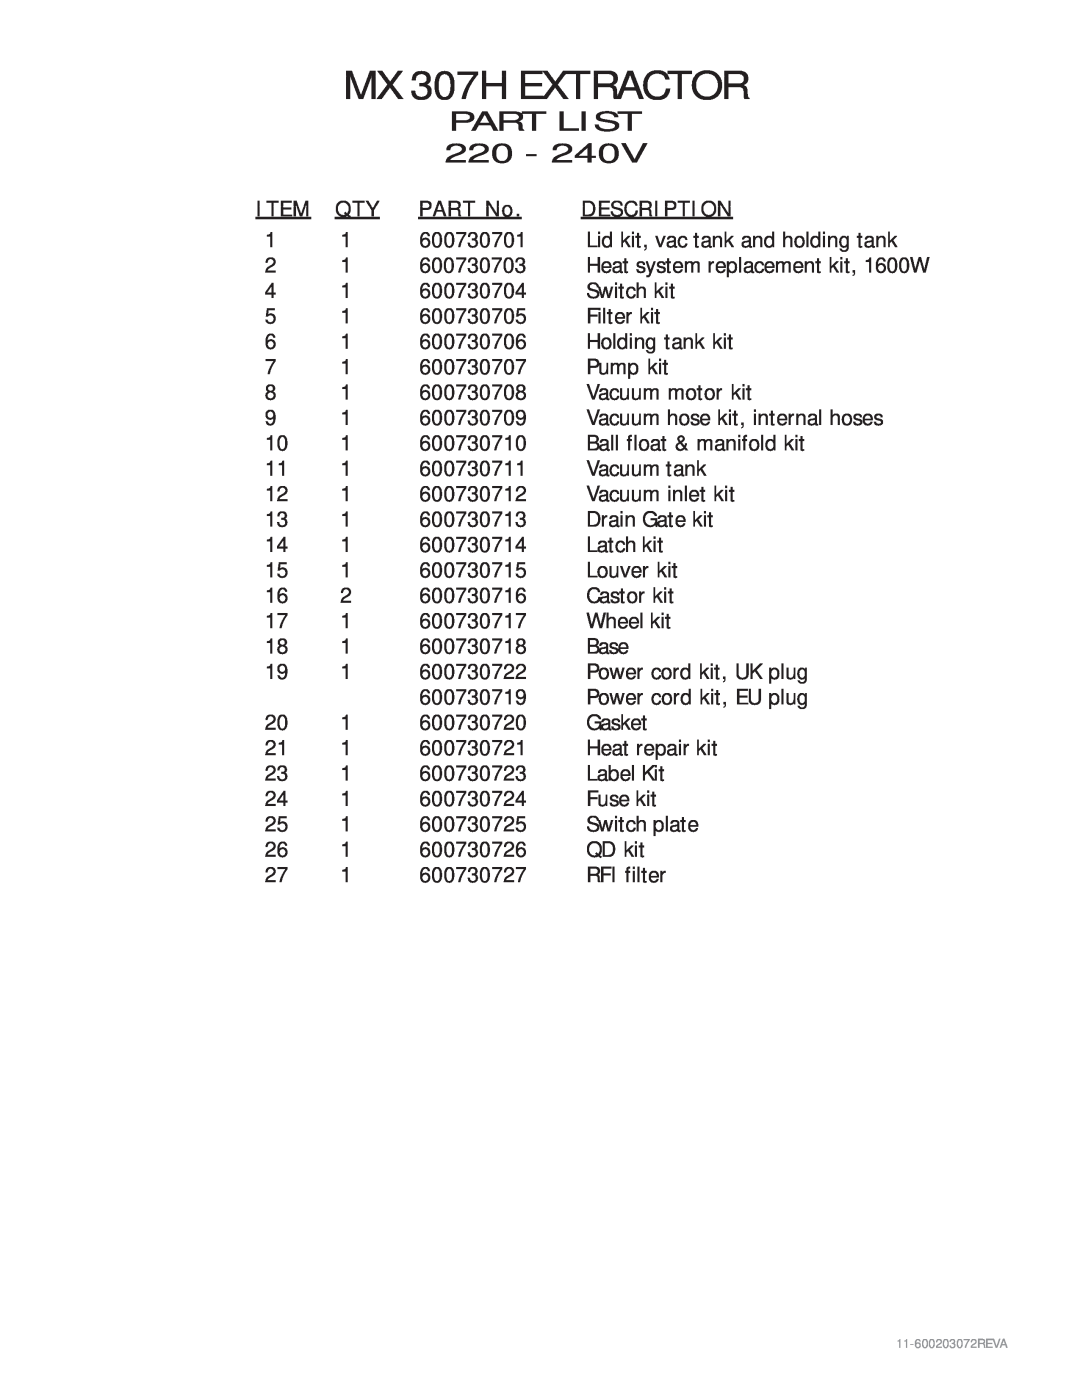 Nilfisk-Advance America MX 307 H instruction manual Description, MX 307H EXTRACTOR, Part List 